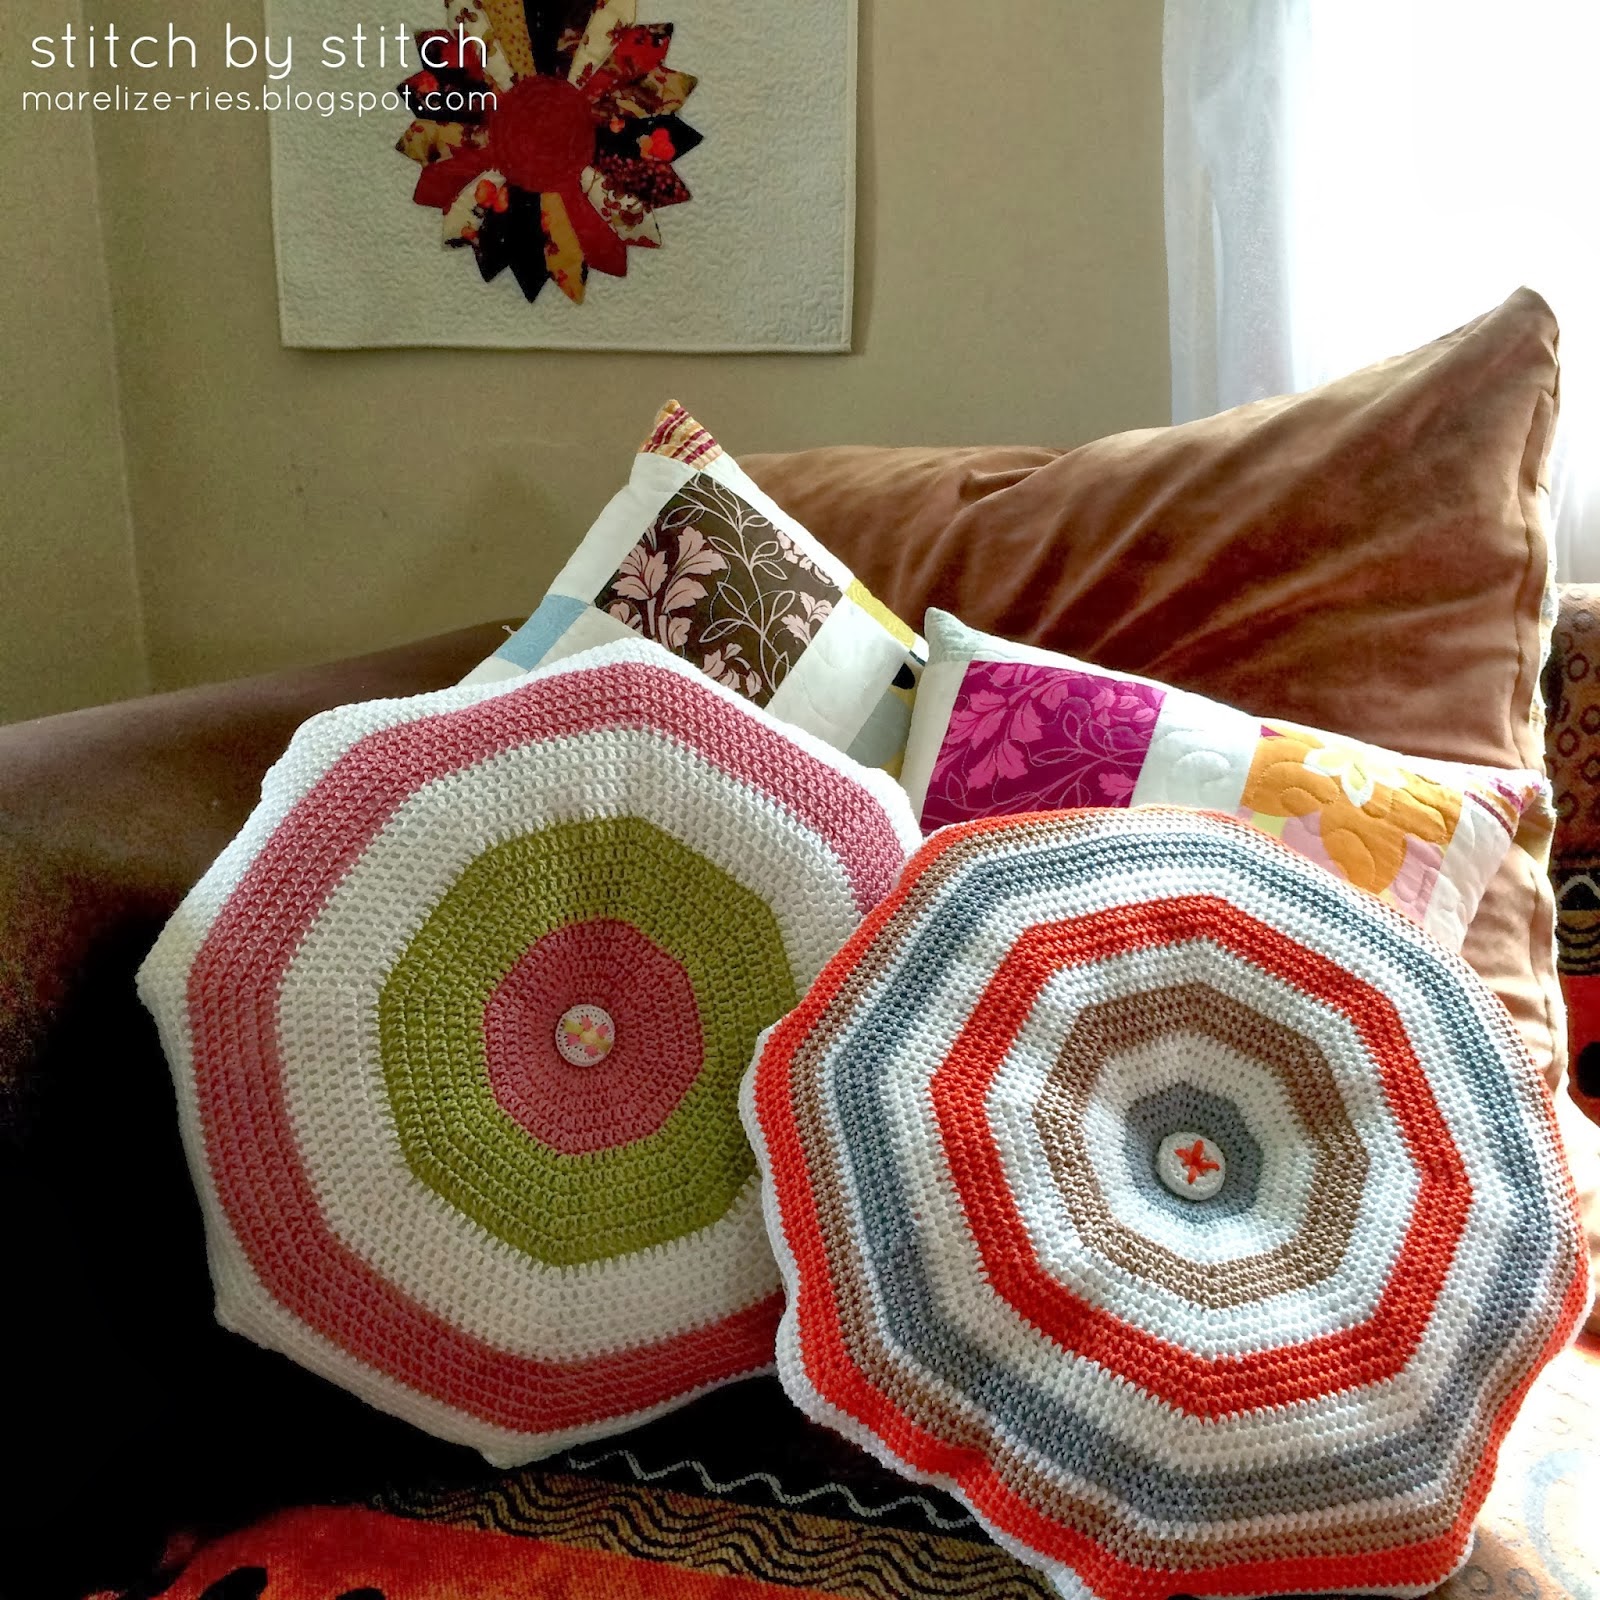 http://marelize-ries.blogspot.com/2014/03/simple-crochet-cushion-tutorial.html